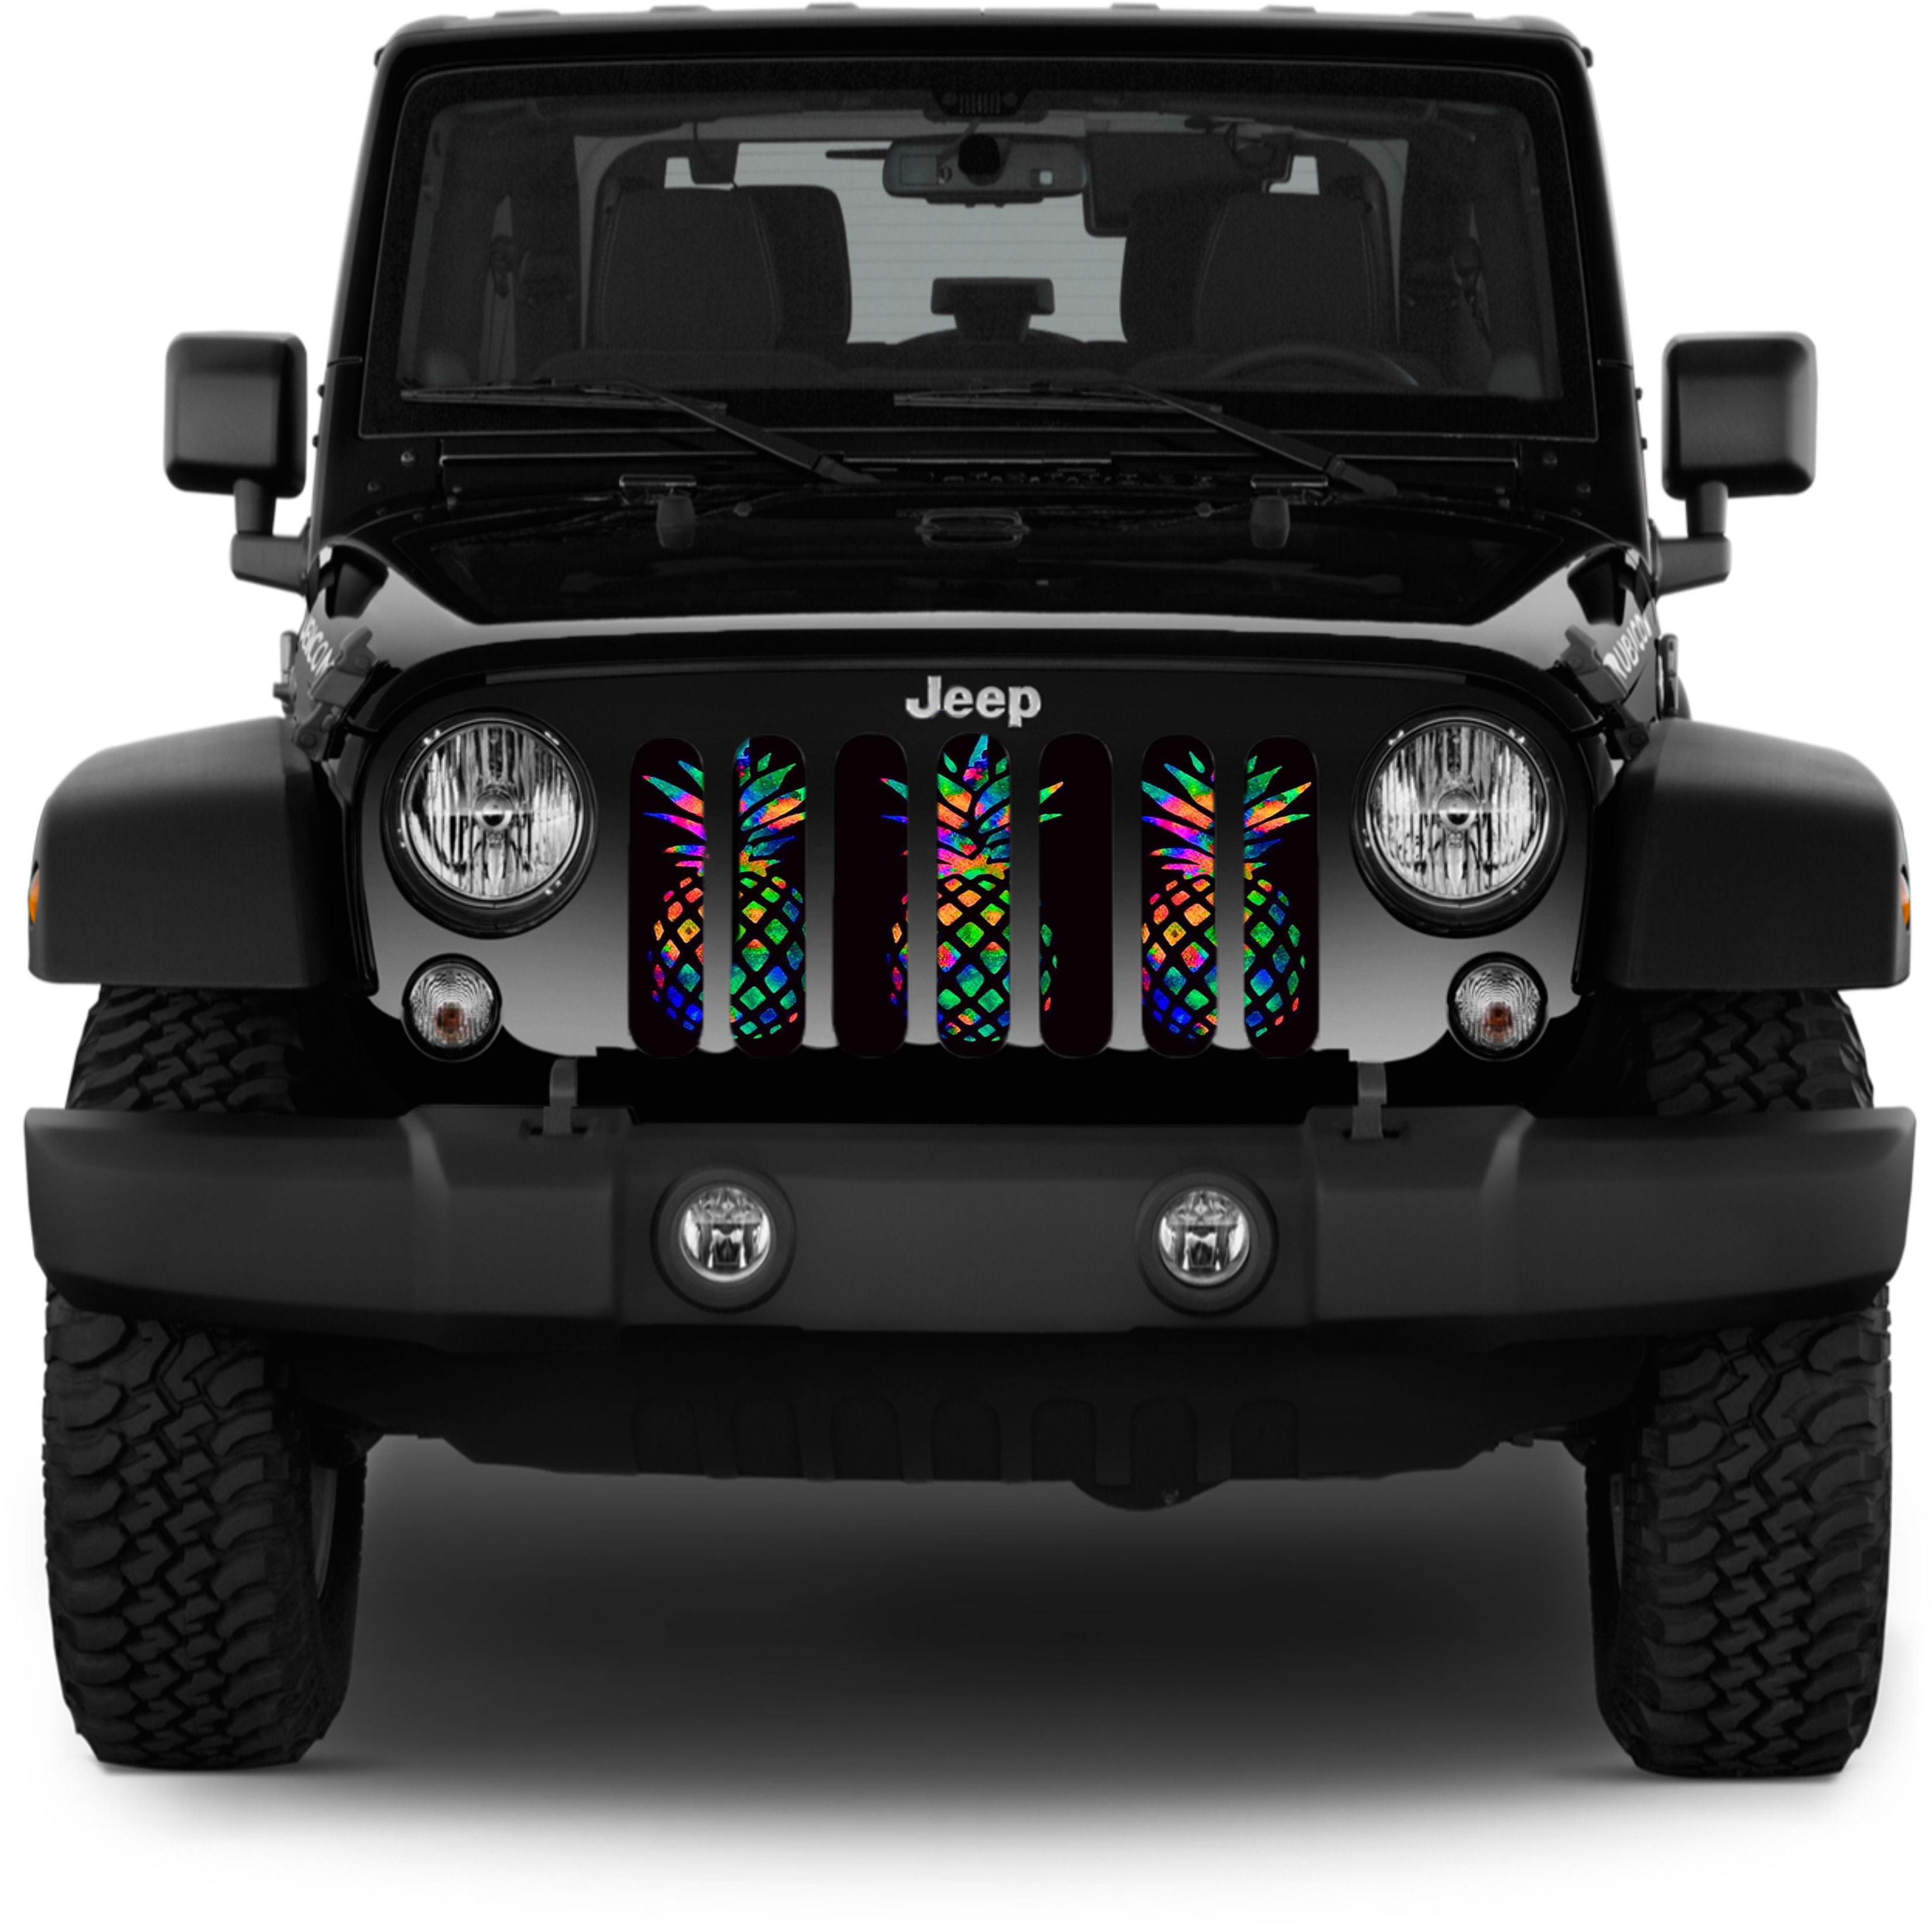 a black Jeep showcasing a fun fluorescent bright neon colored pineapple design grille insert for Jeep. 